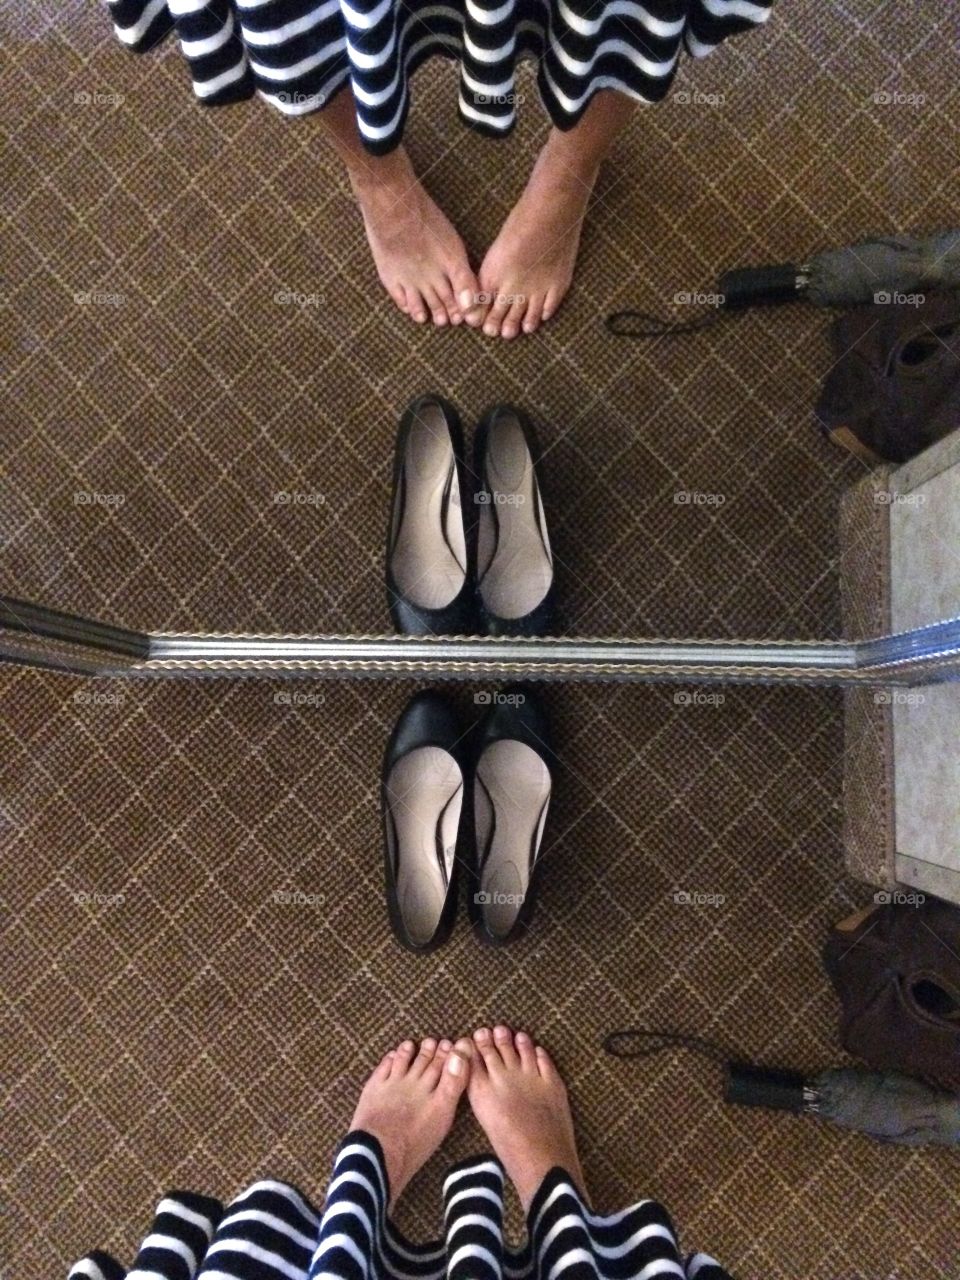 Dress shoe selfie. Black heels. Prepared for rain. Hotel room reflection.